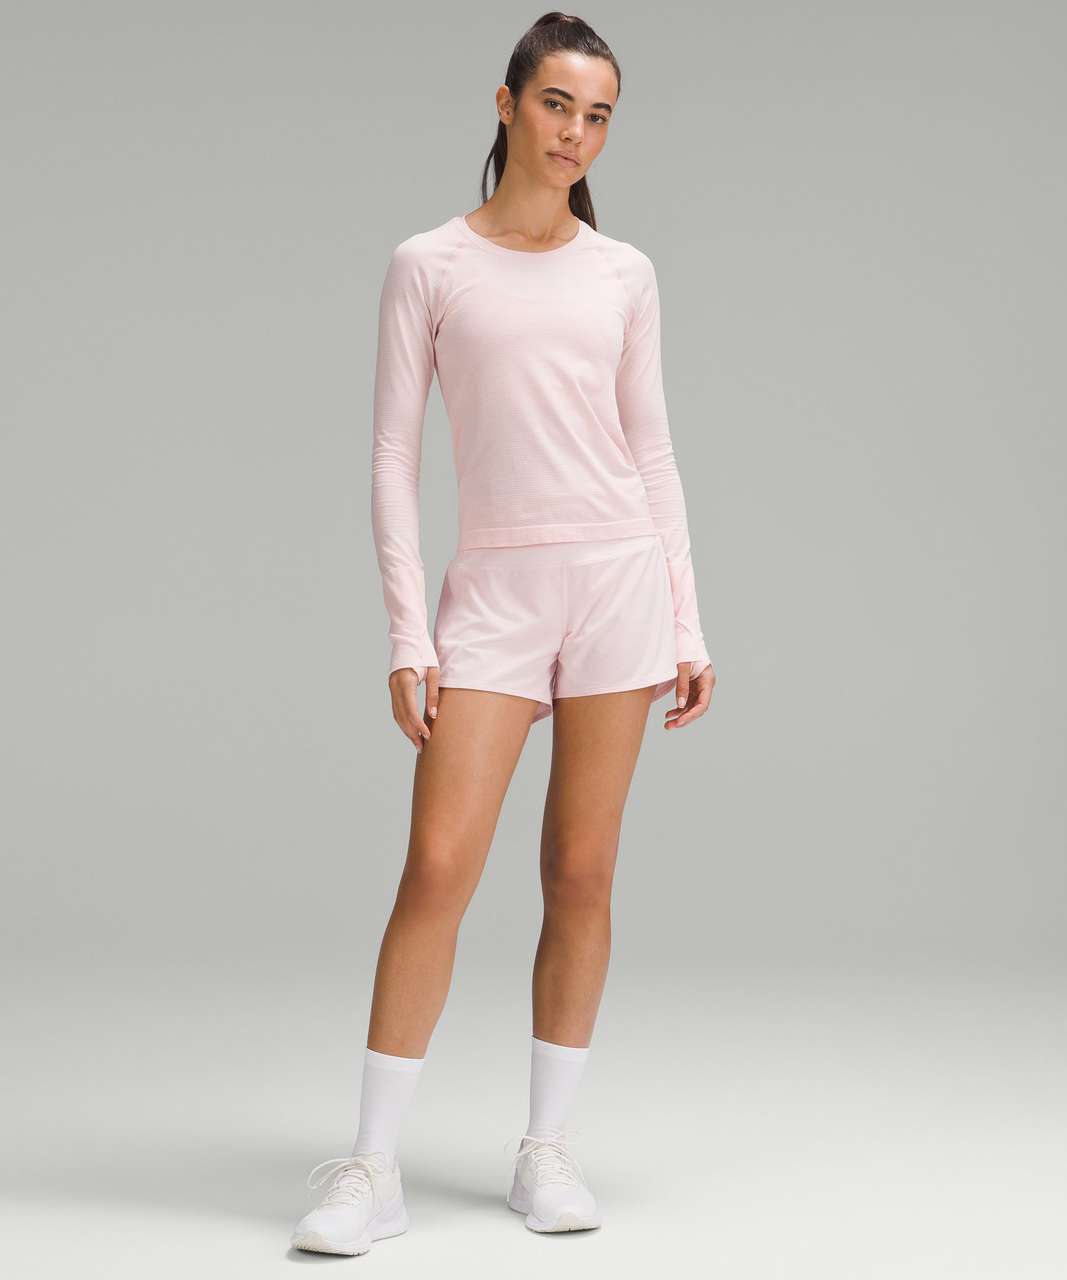 NWT Lululemon Swiftly Tech Long Sleeve Shirt 2.0 Race Length - Pink Peony  Size 6